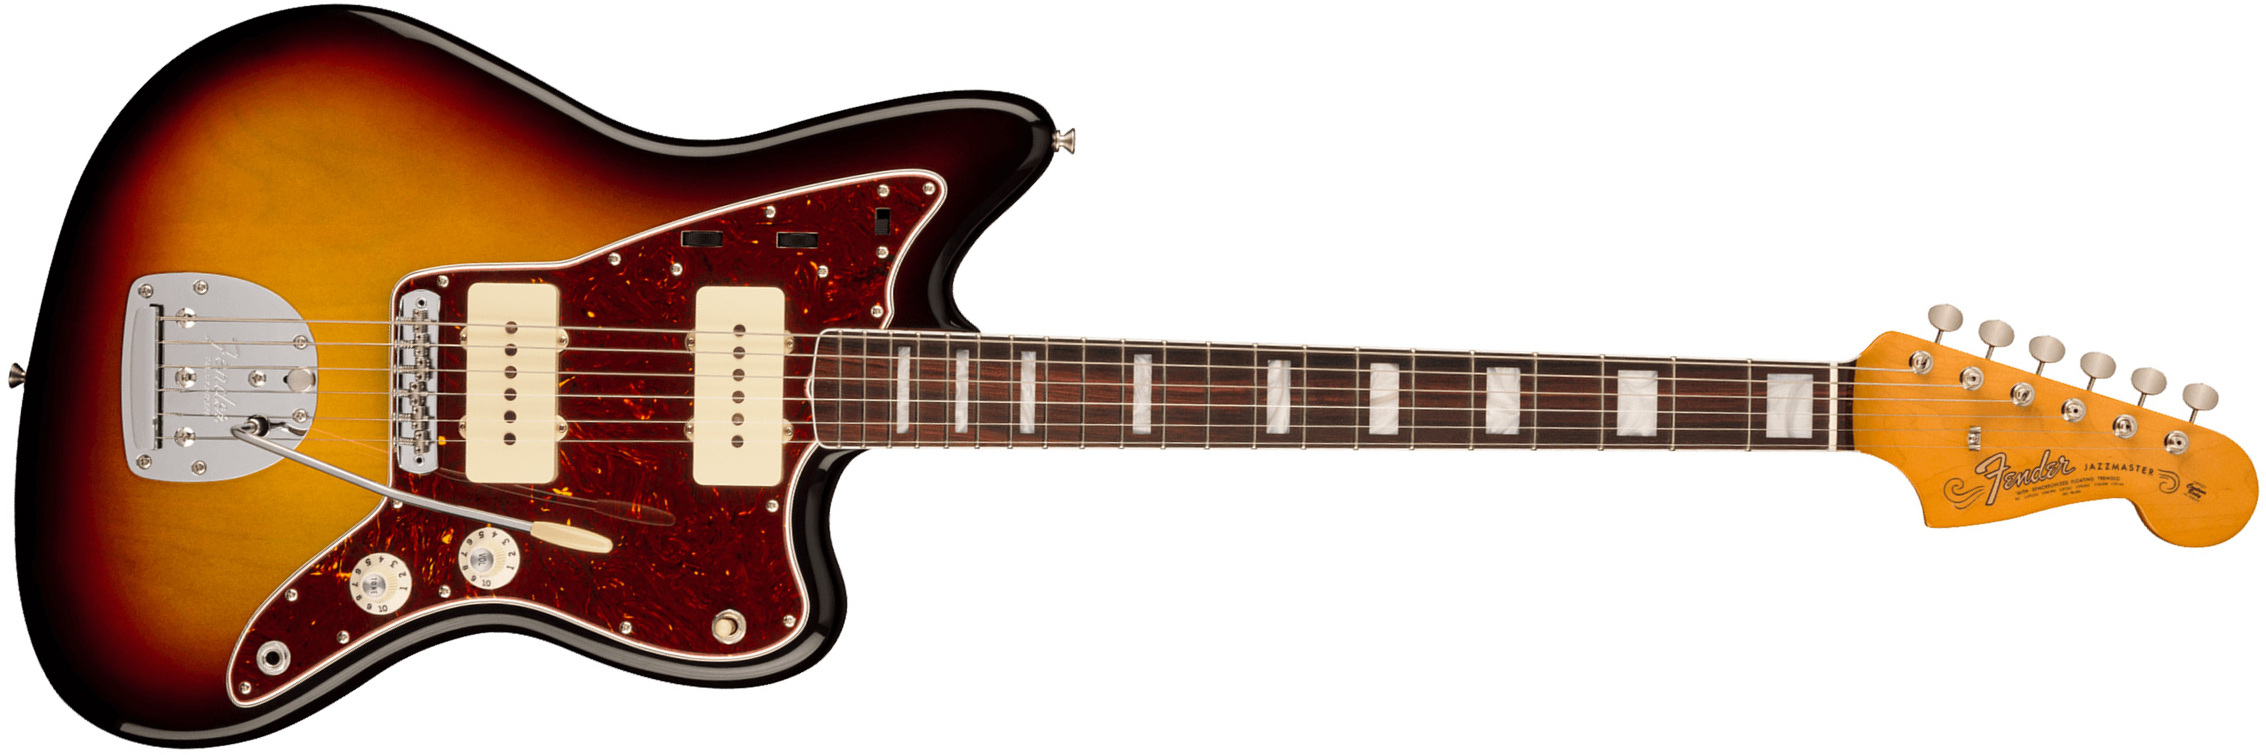 Fender Jazzmaster 1966 American Vintage Ii Usa Sh Trem Rw - 3-color Sunburst - Retro-rock elektrische gitaar - Main picture